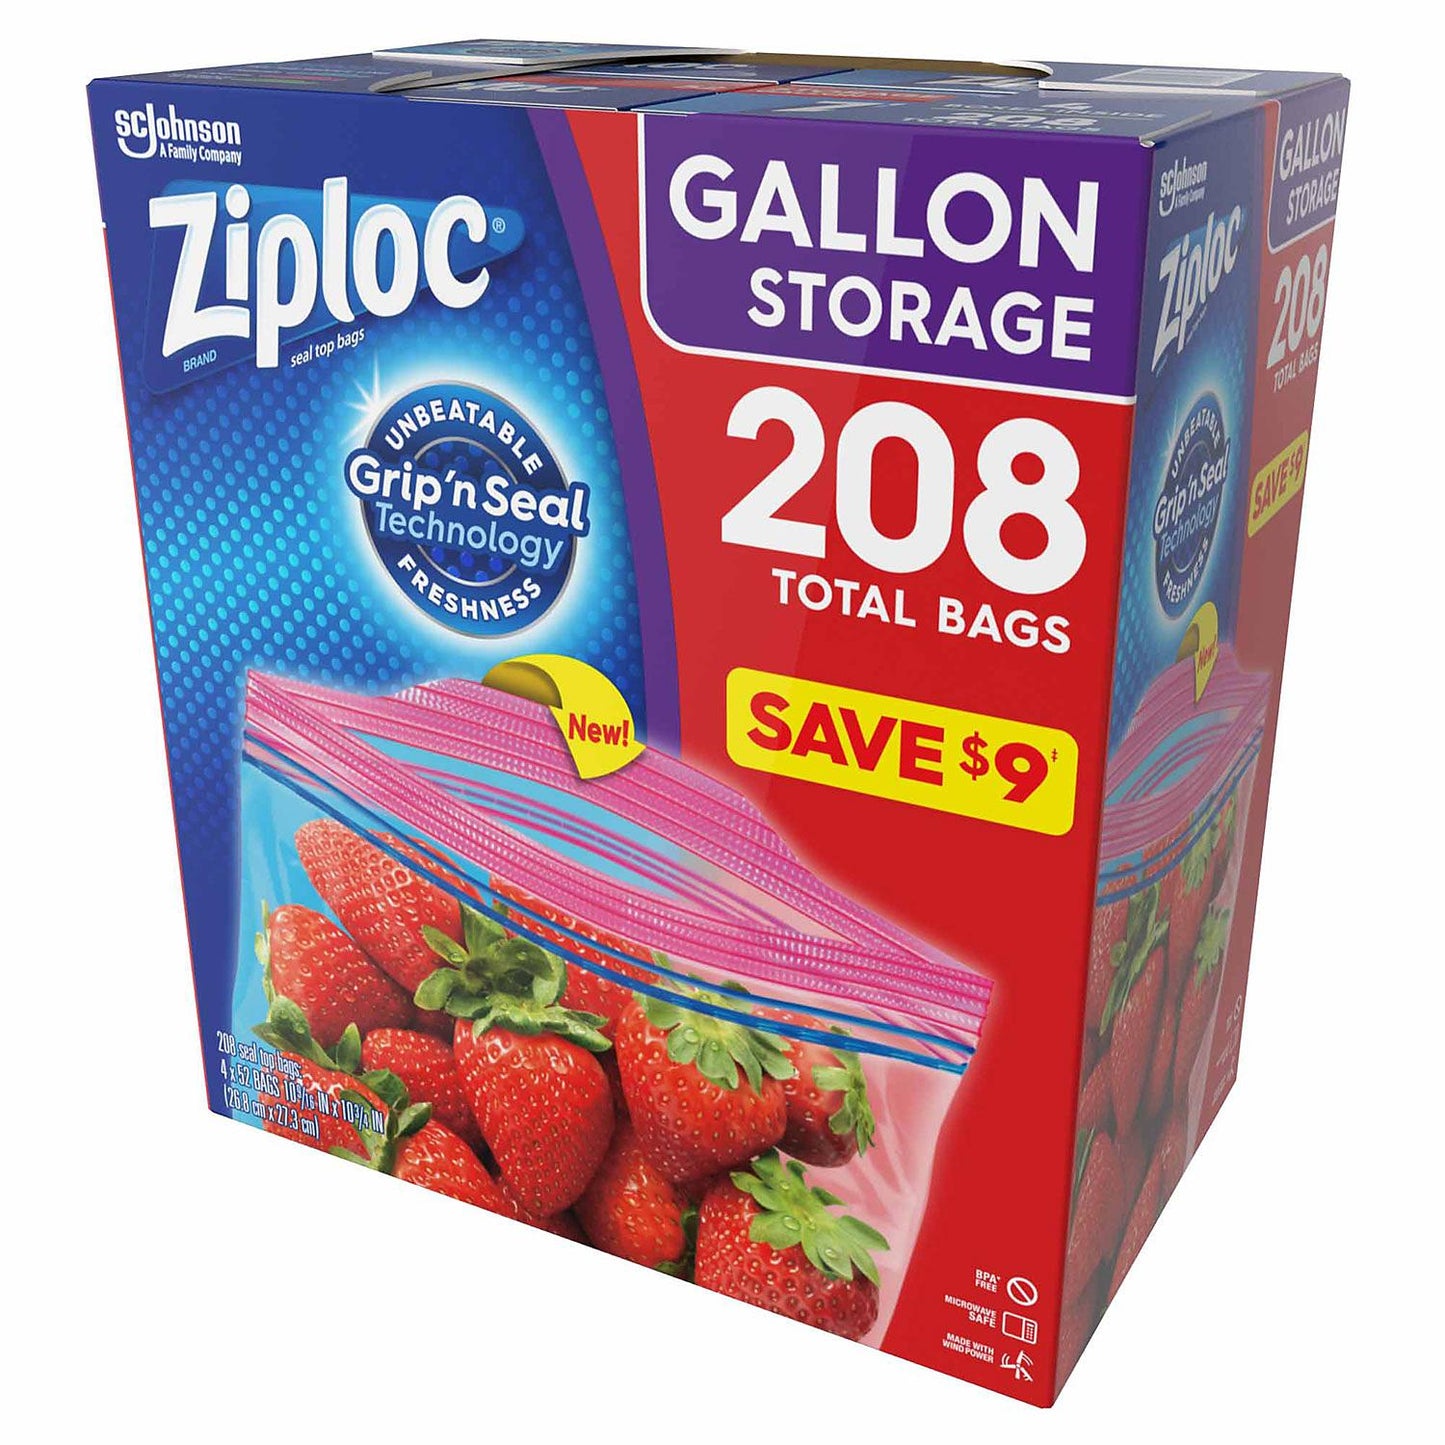 Ziploc Storage Gallon Bags 52 Count